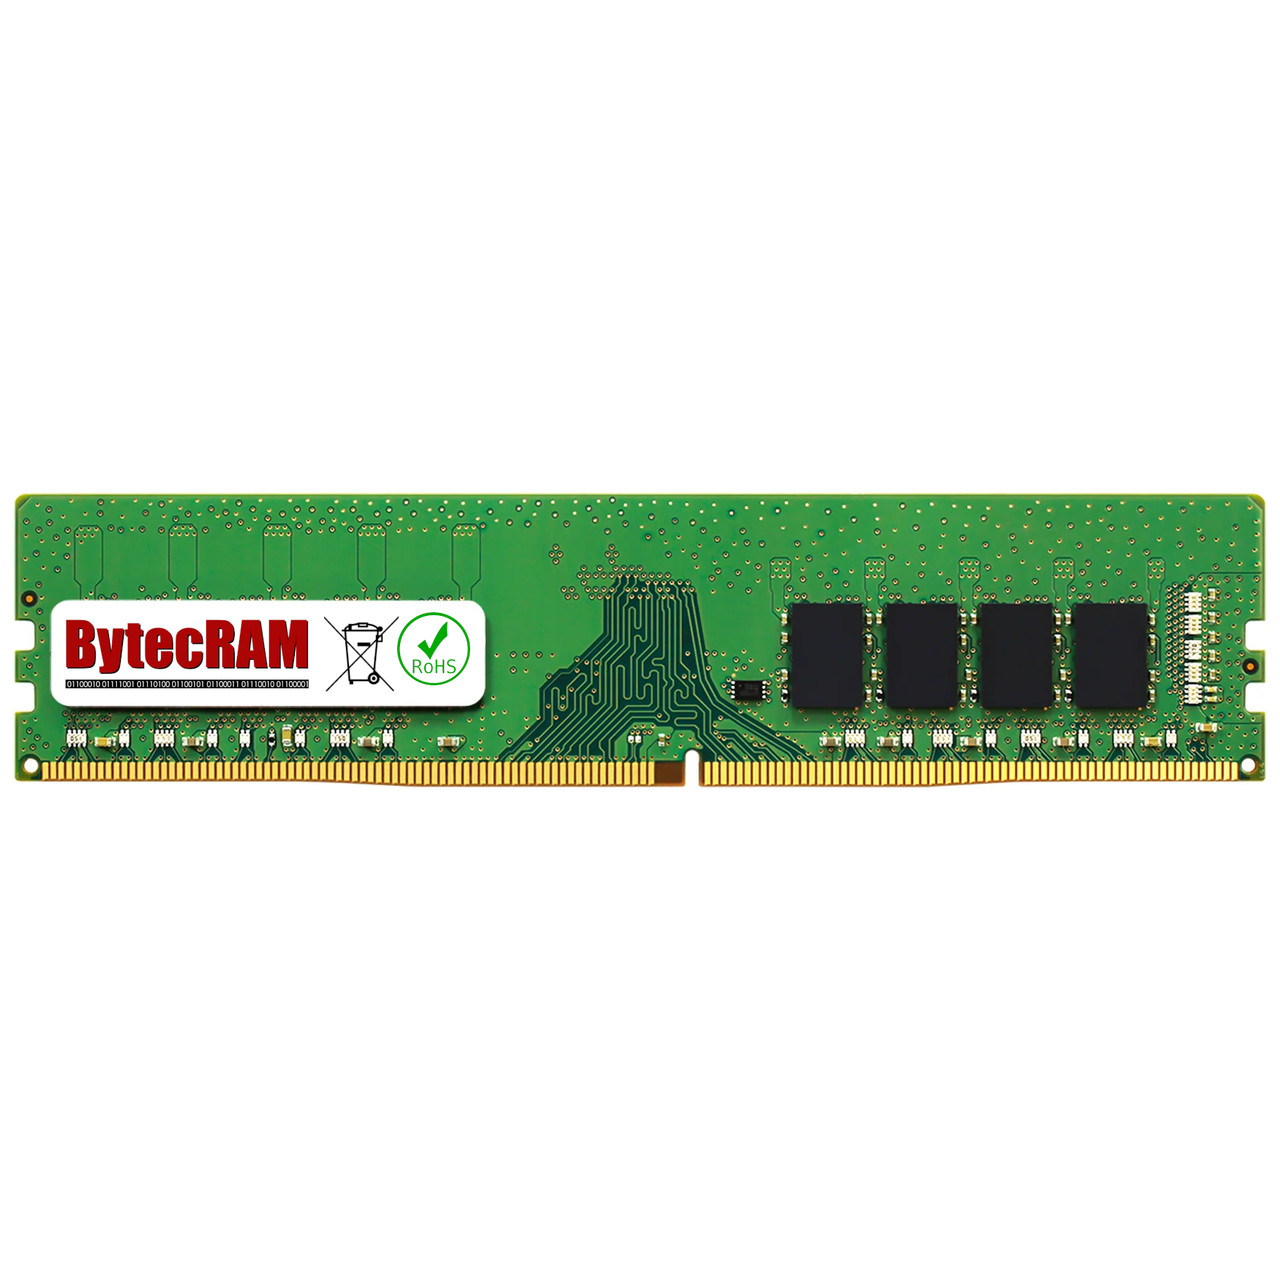 eBay*16GB Acer Nitro N50-600-UR19 DDR4 2666MHz UDIMM Memory RAM Upgrade